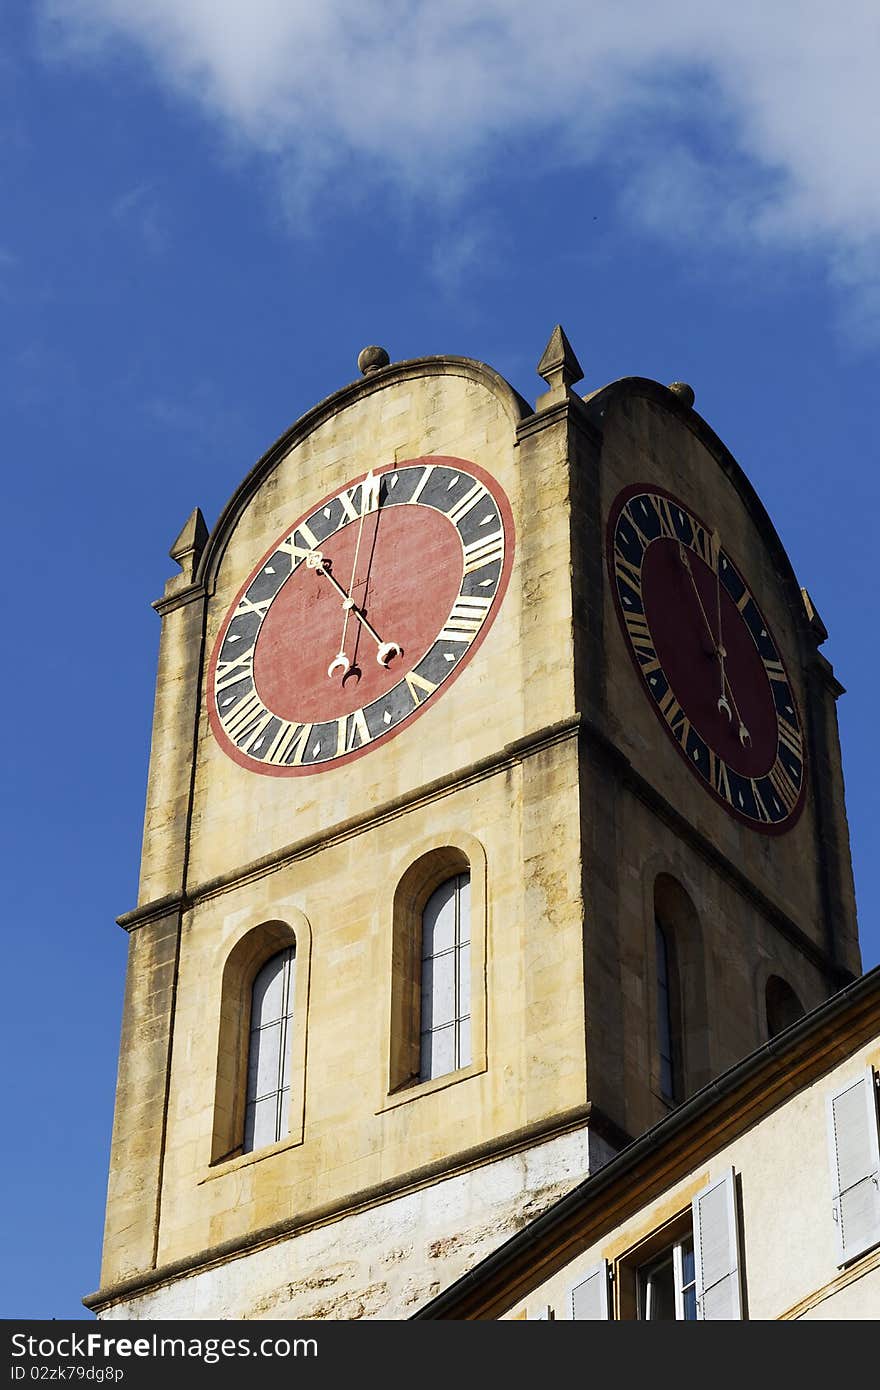 Tower whith clock in Neuchatel in Switzerland. Tower whith clock in Neuchatel in Switzerland